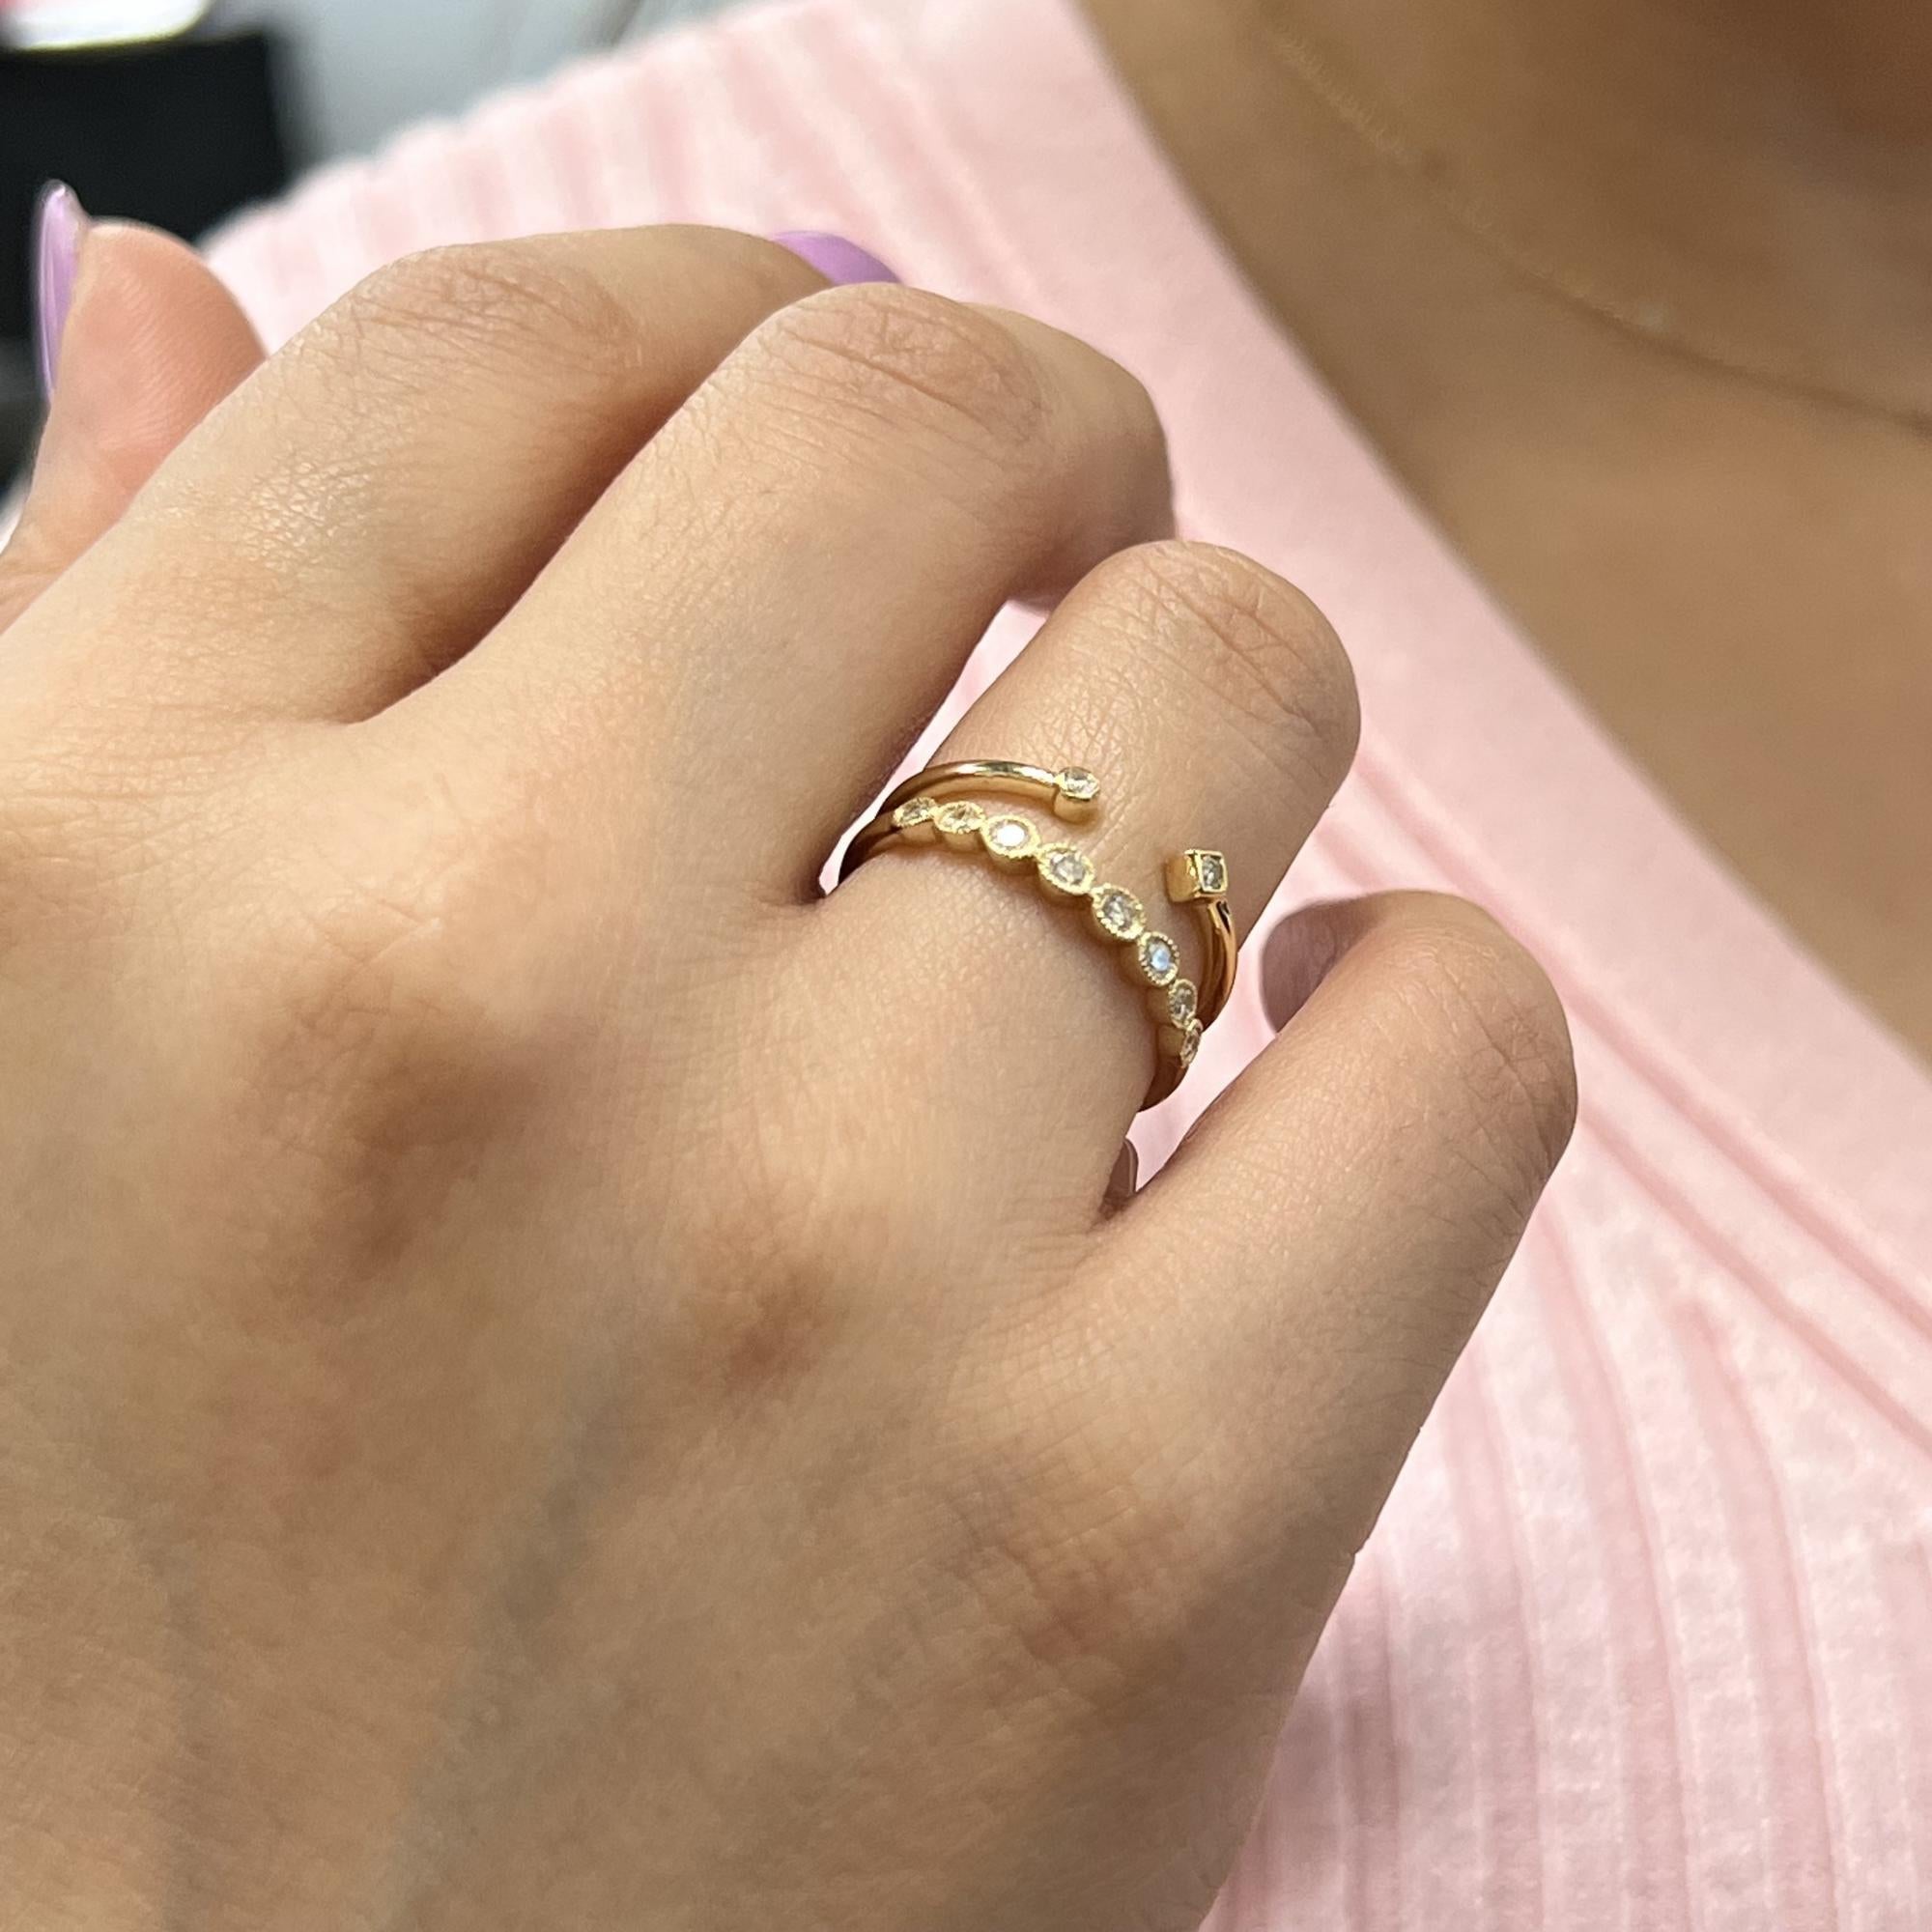 Rachel Koen Round Cut Diamond Ring 14K Yellow Gold 0.187cttw For Sale 1